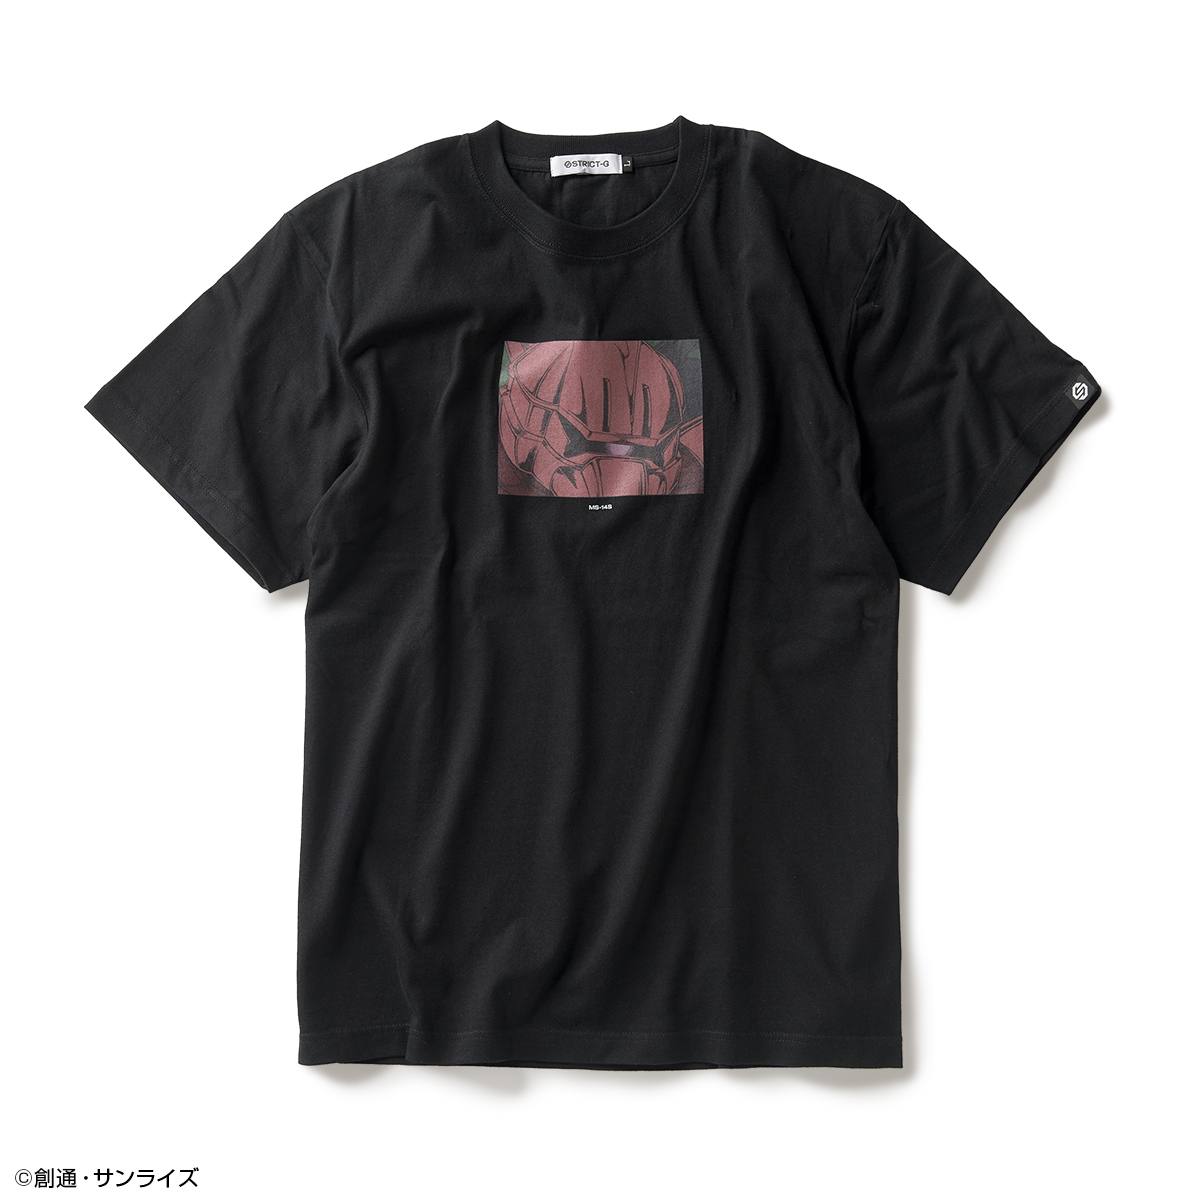 STRICT-G『機動戦士ガンダム』Tシャツコレクション CHAR AZNABLE 004